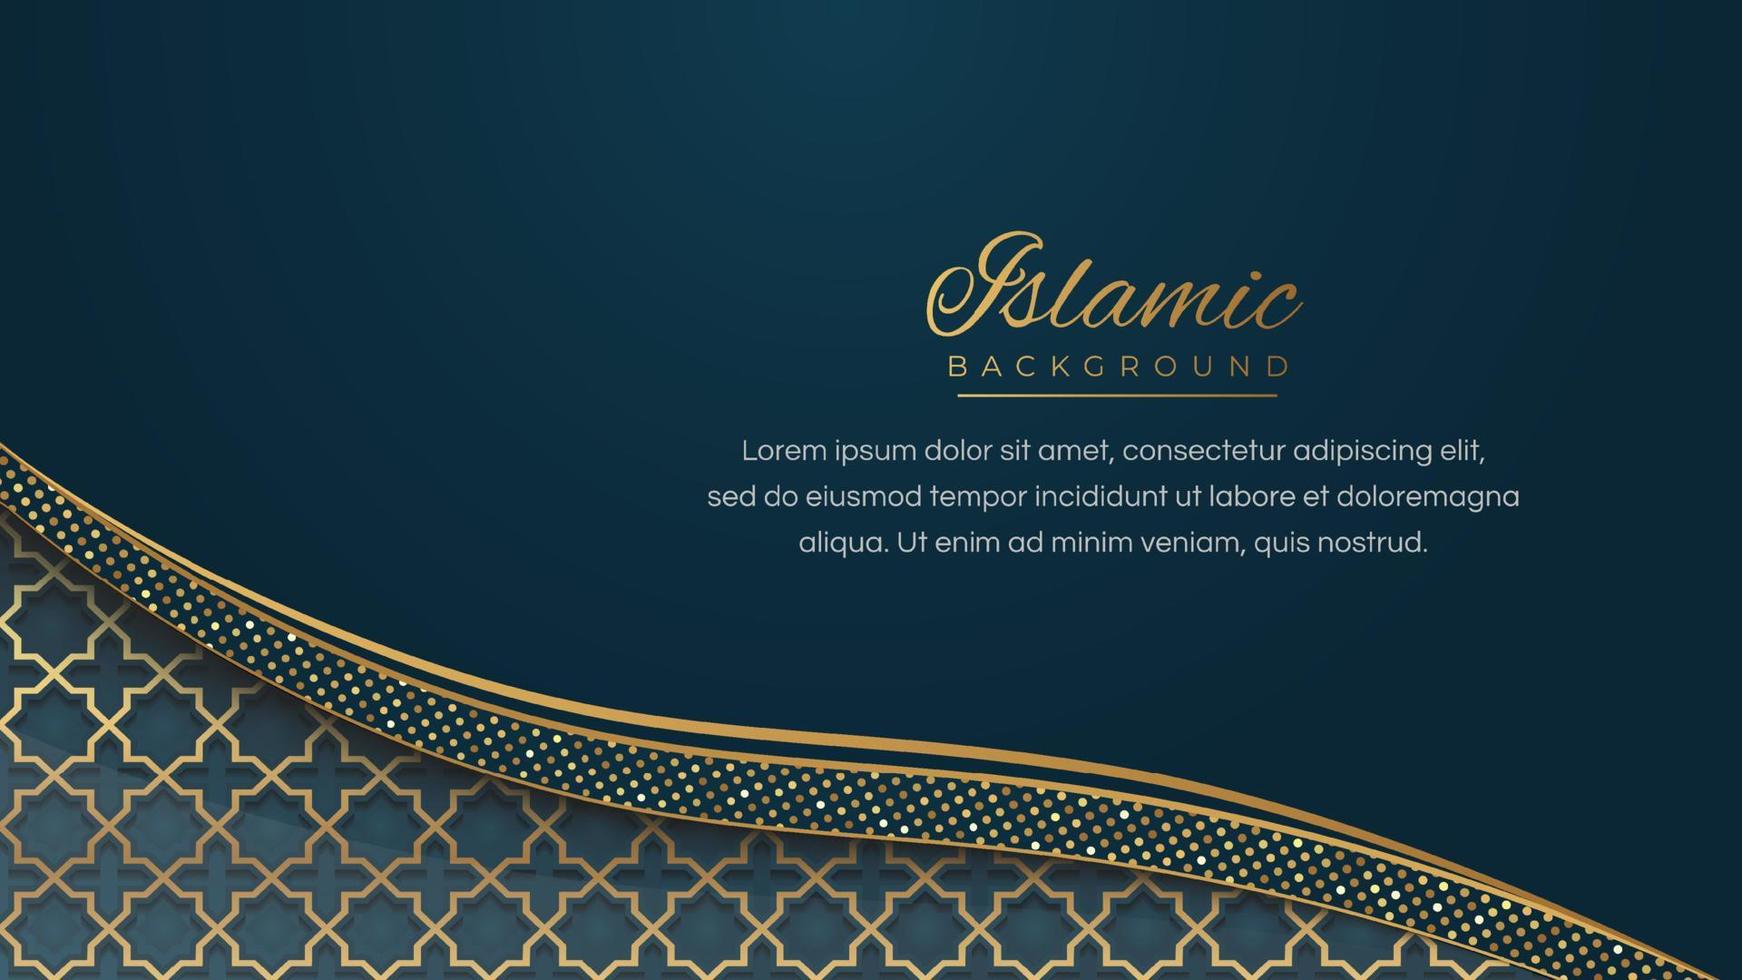 Arabic Islamic Elegant Blue Golden Luxury Frame Ornament Pattern Background vector